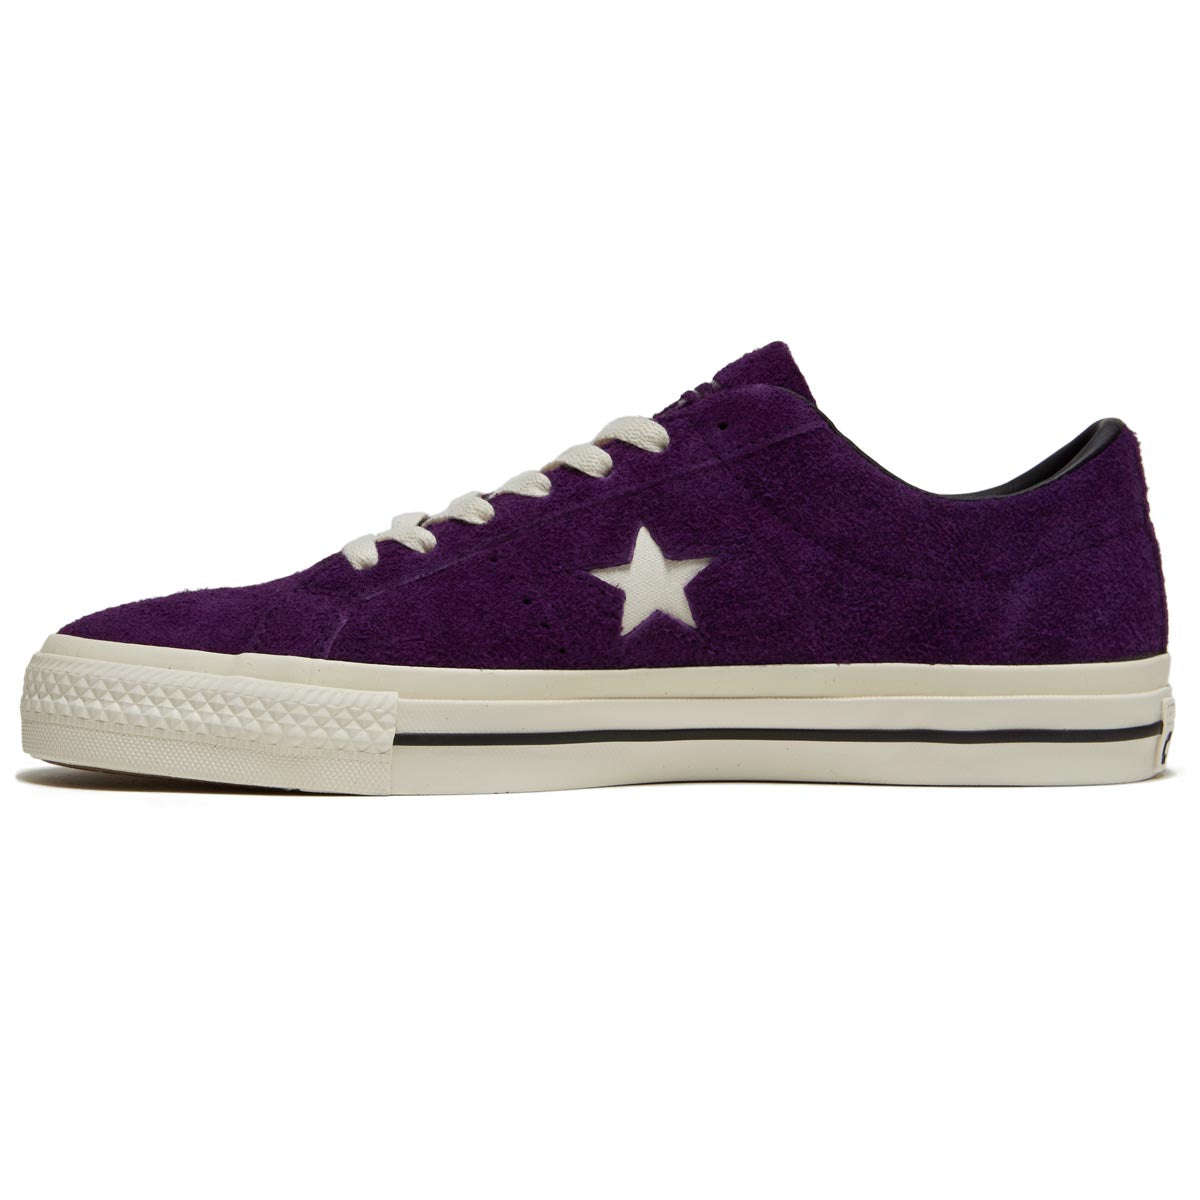 Converse One Star Pro Ox Shoes - Night Purple/Egret/Black image 2